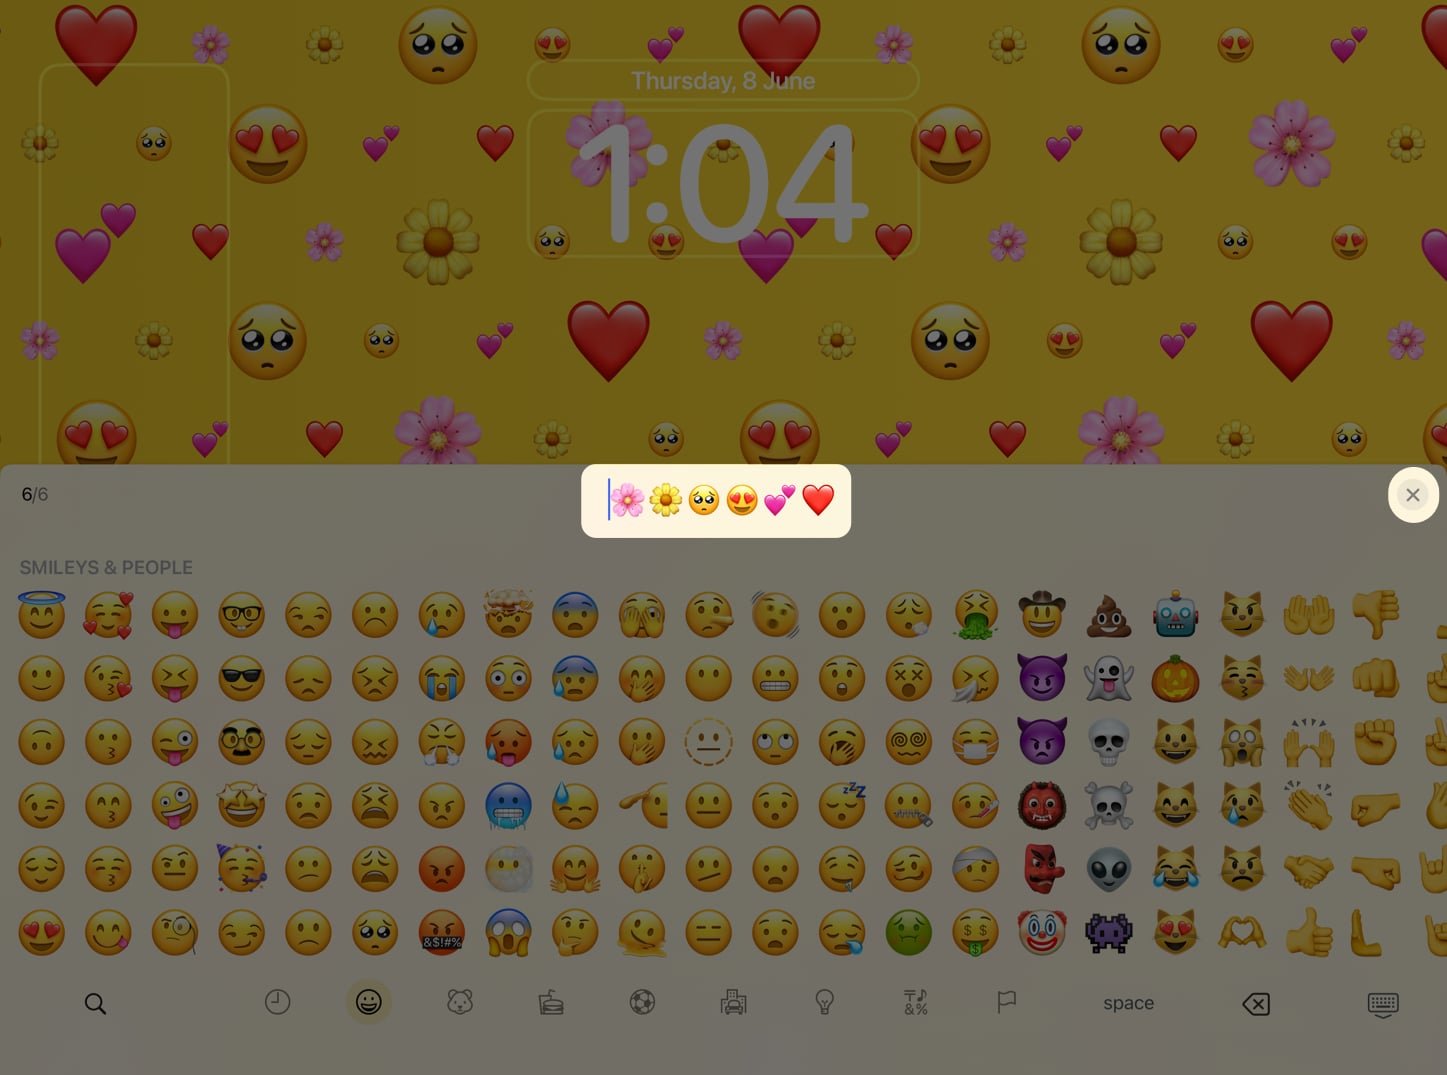 Select Emojis you want as your iPad lock screen wallpaper